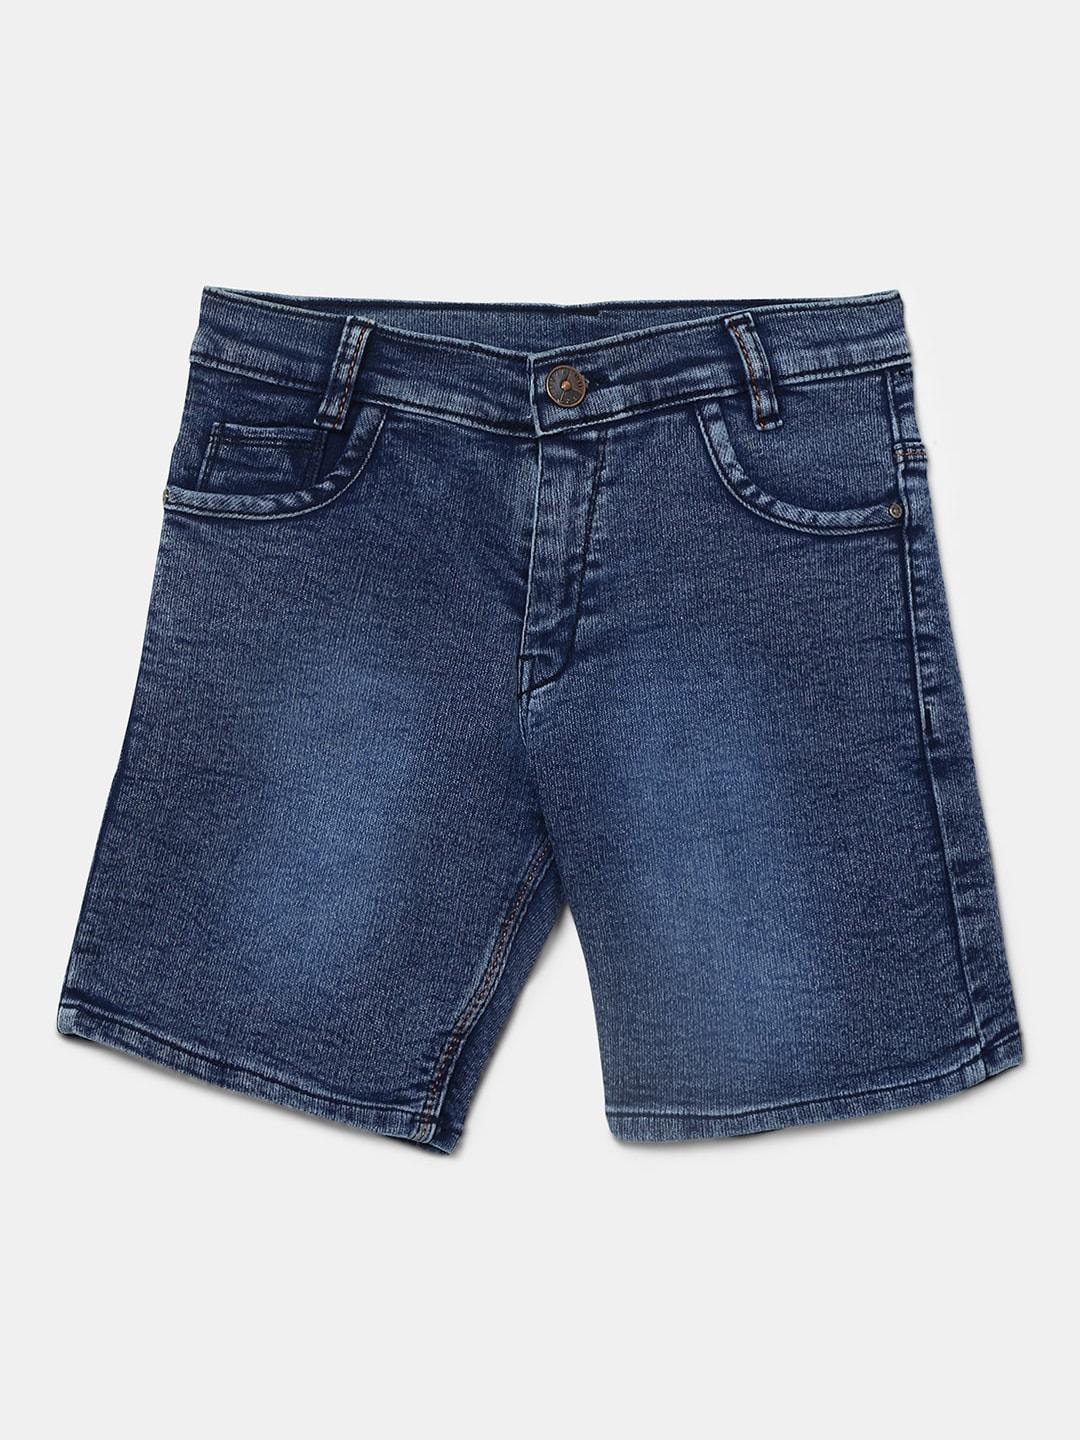 v-mart-boys-blue-washed-denim-shorts